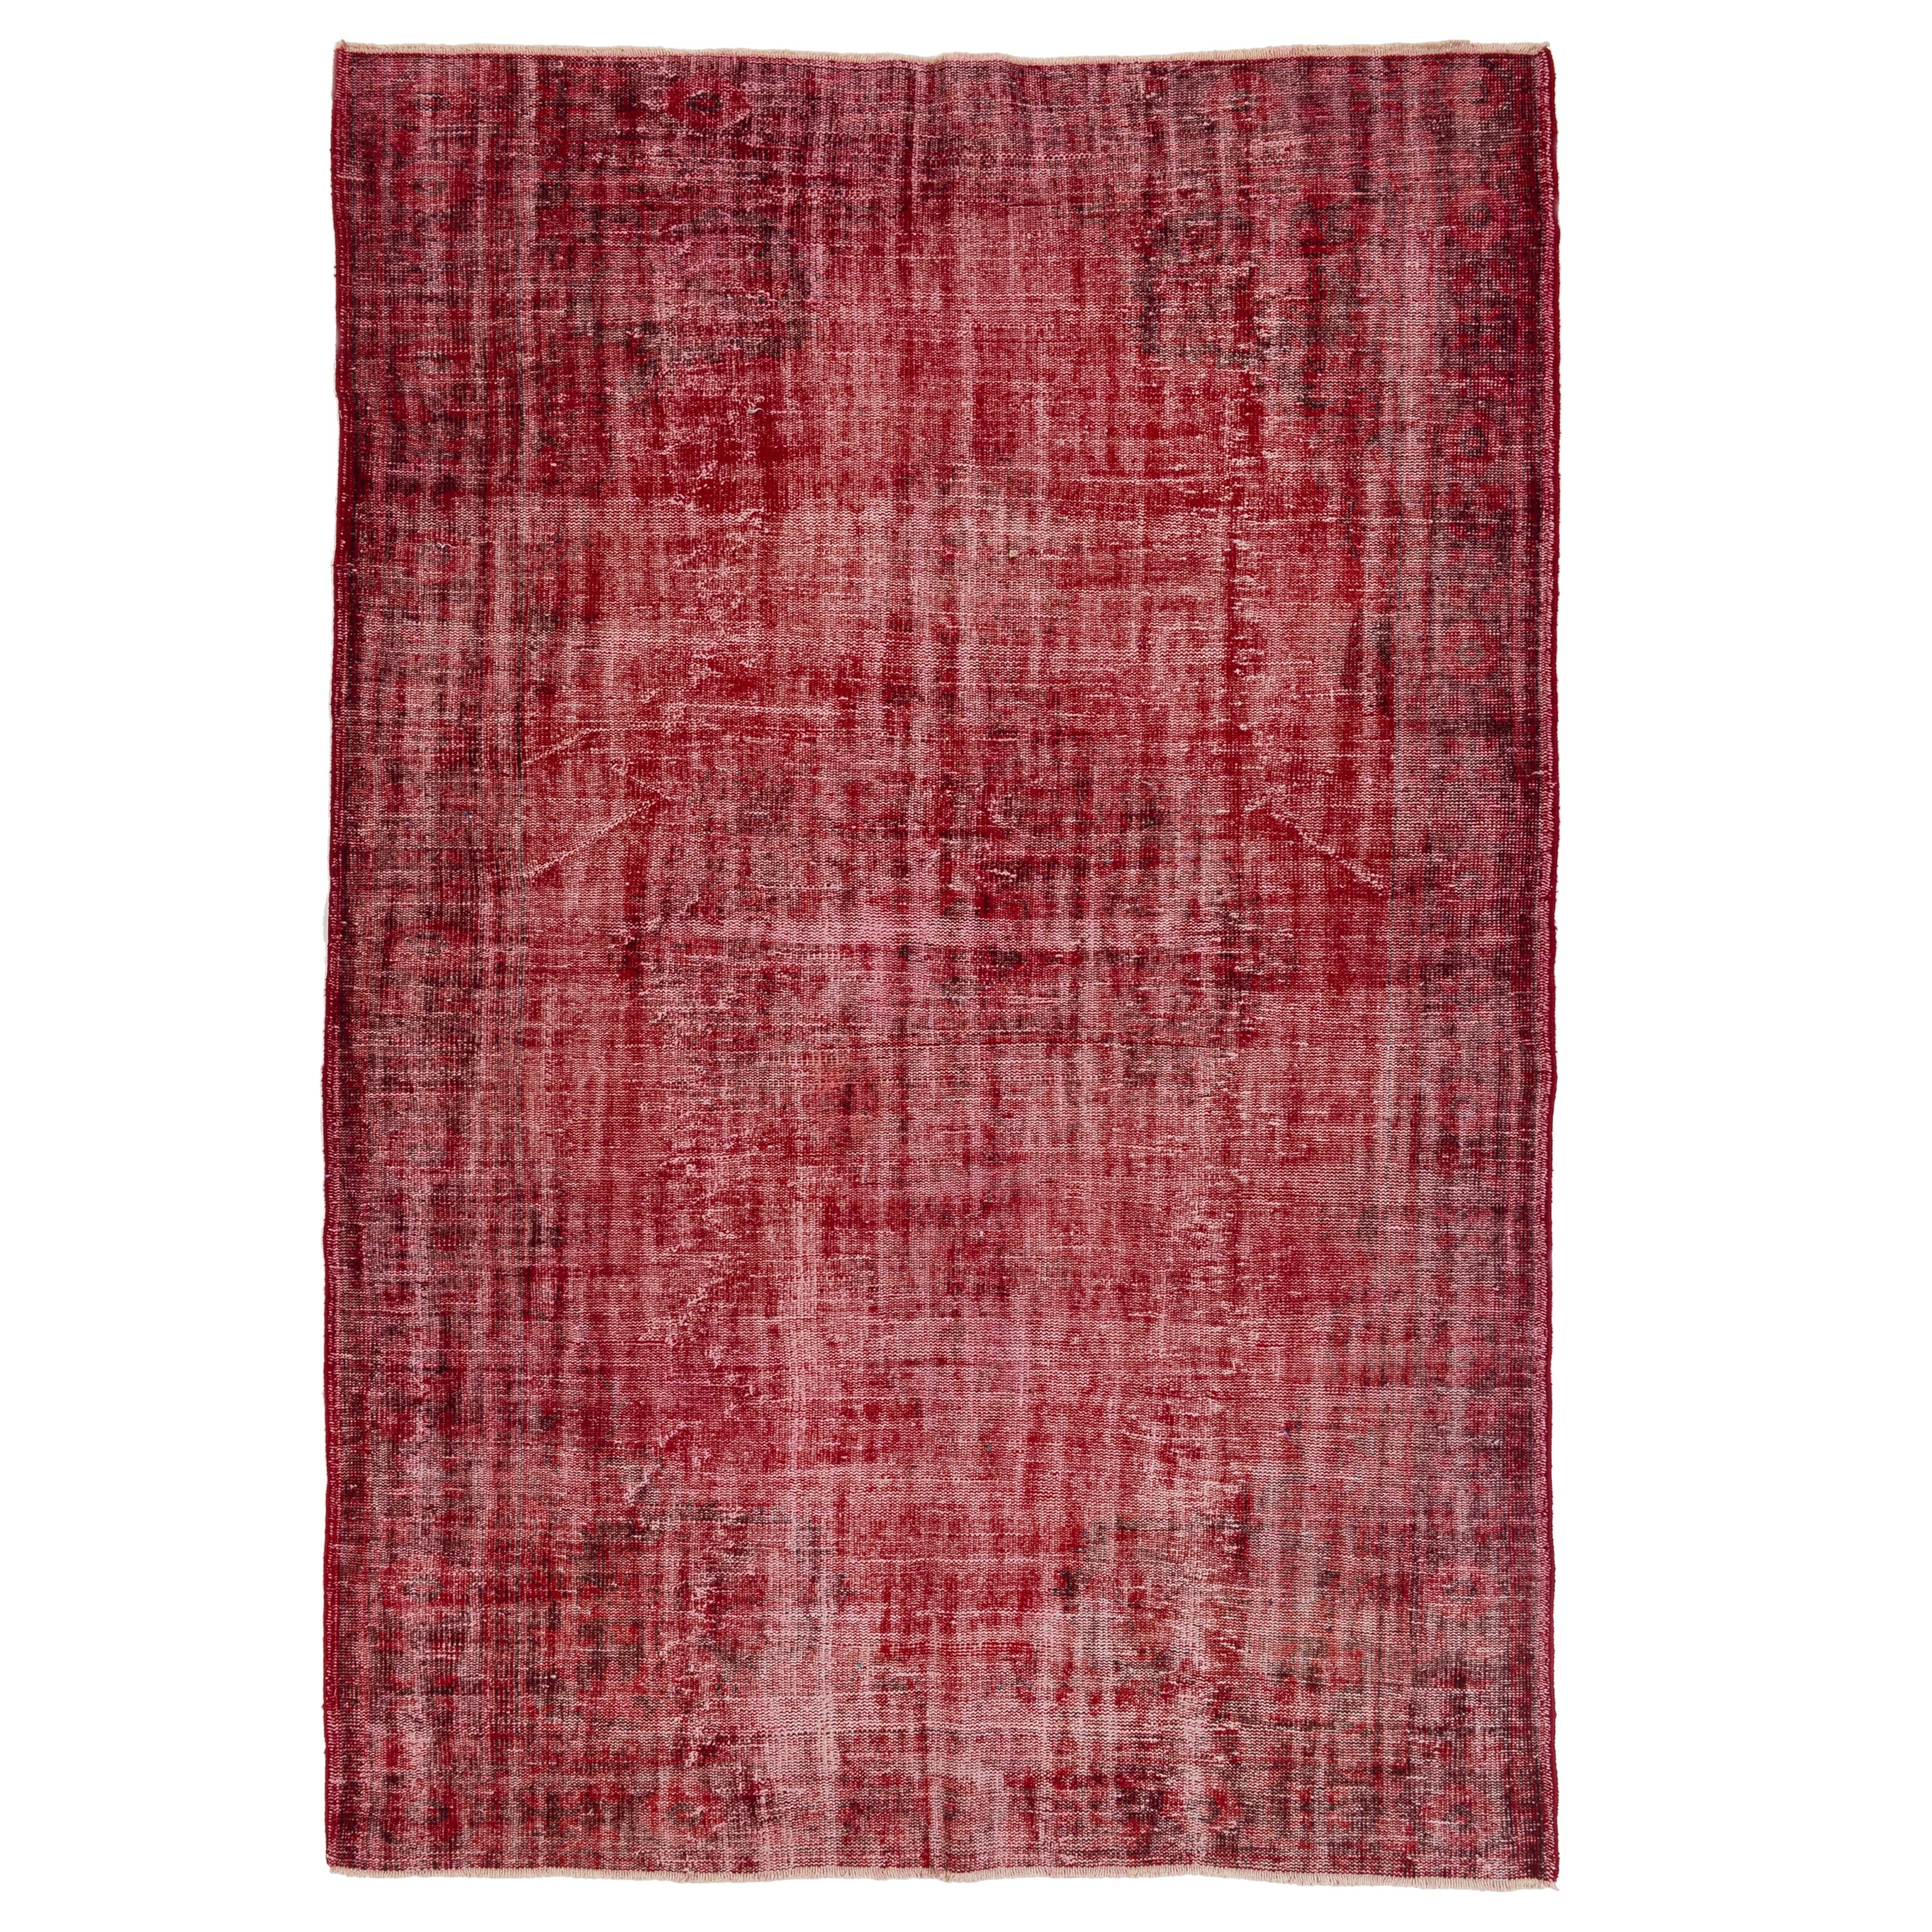 Shabby Chic Handmade Wool Rug in Burgundy Red, Vintage Turkish Carpet